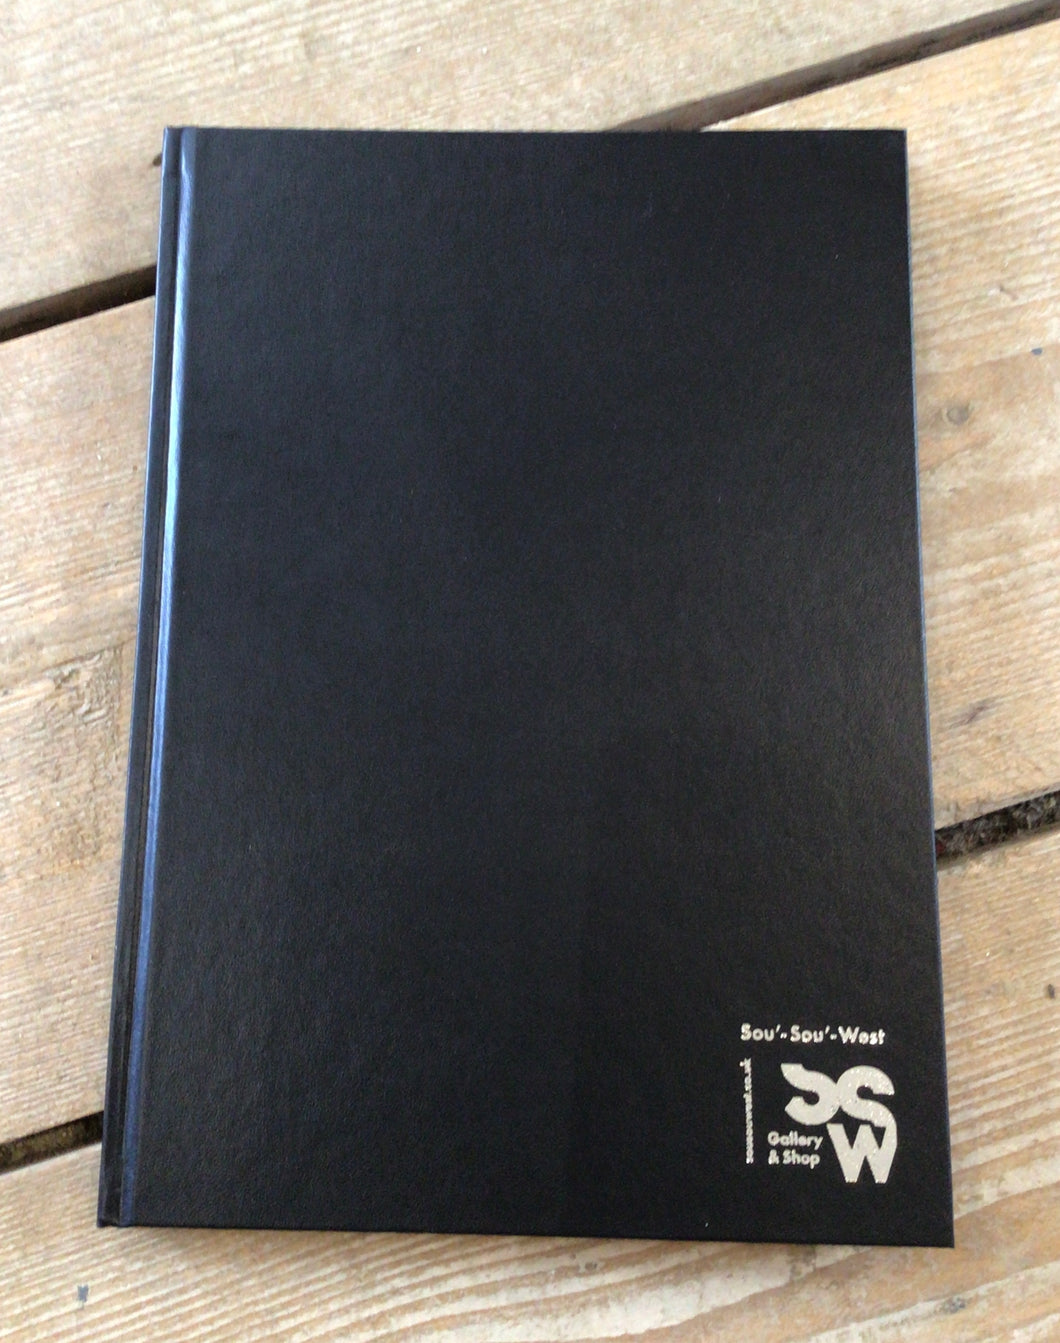 A4 Portrait Classic Hardback Sketchbook- Black